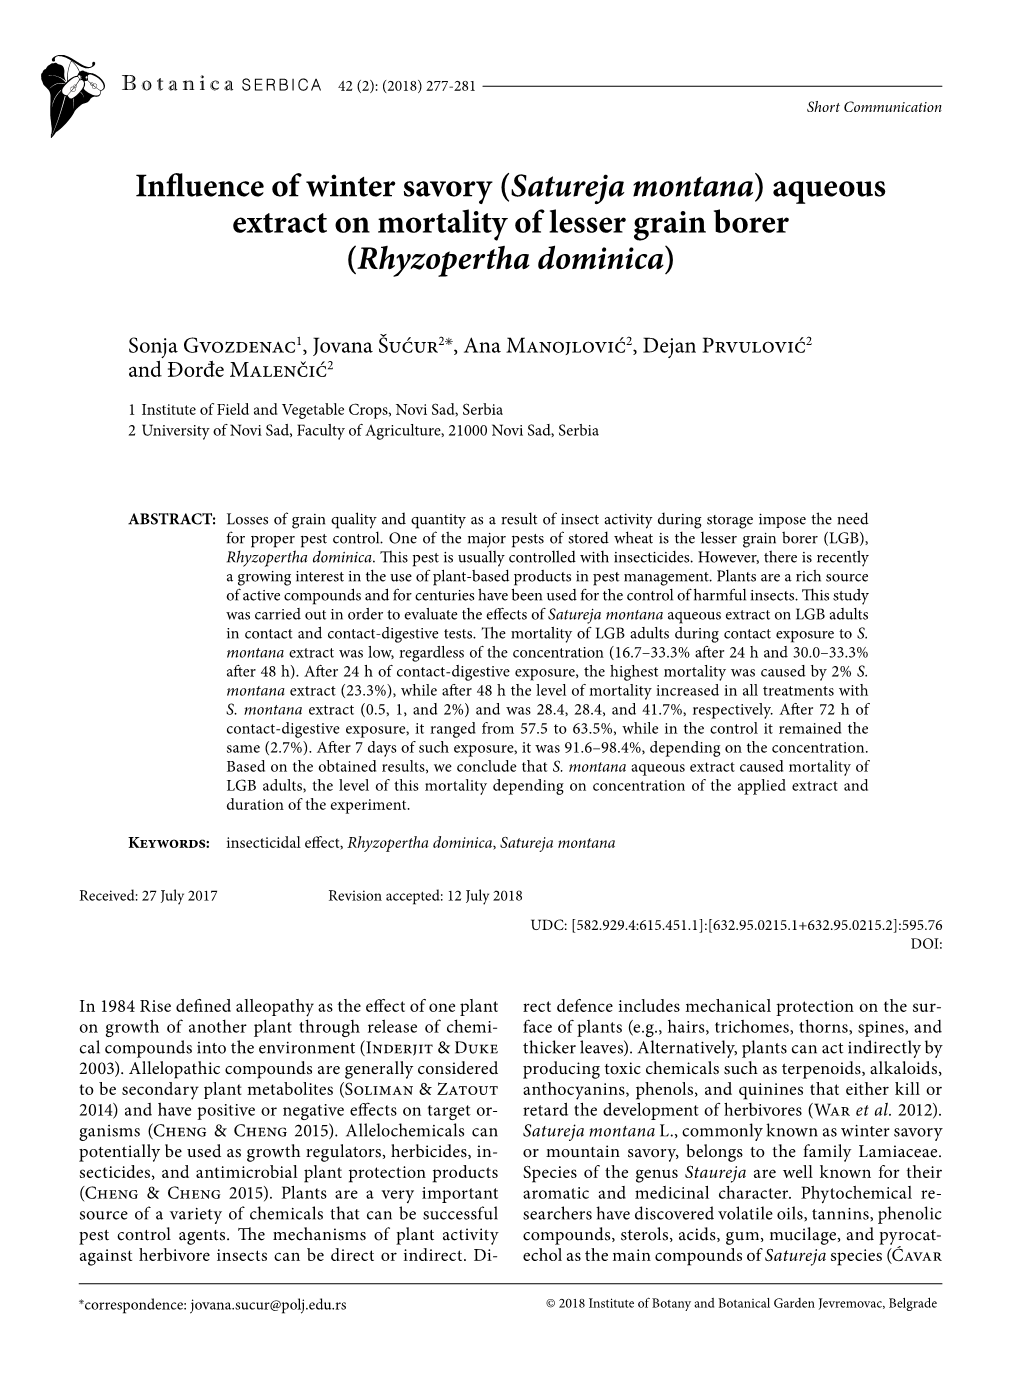 Influence of Winter Savory (Satureja Montana) Aqueous Extract on Mortality of Lesser Grain Borer (Rhyzopertha Dominica)